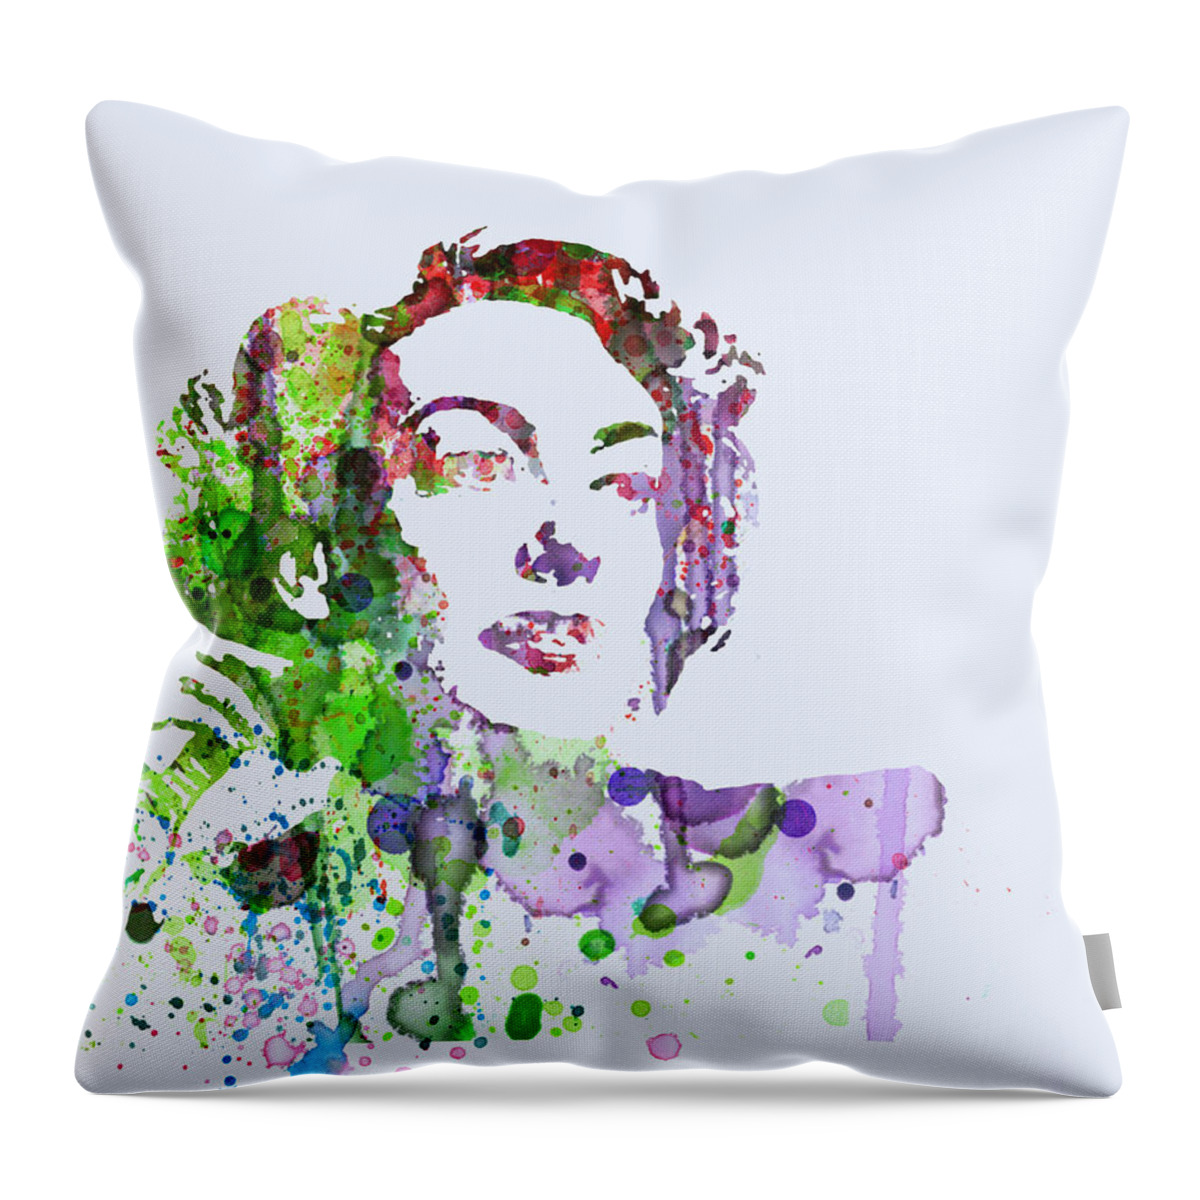 Joan Crawford Throw Pillow featuring the digital art Joan Crawford by Naxart Studio